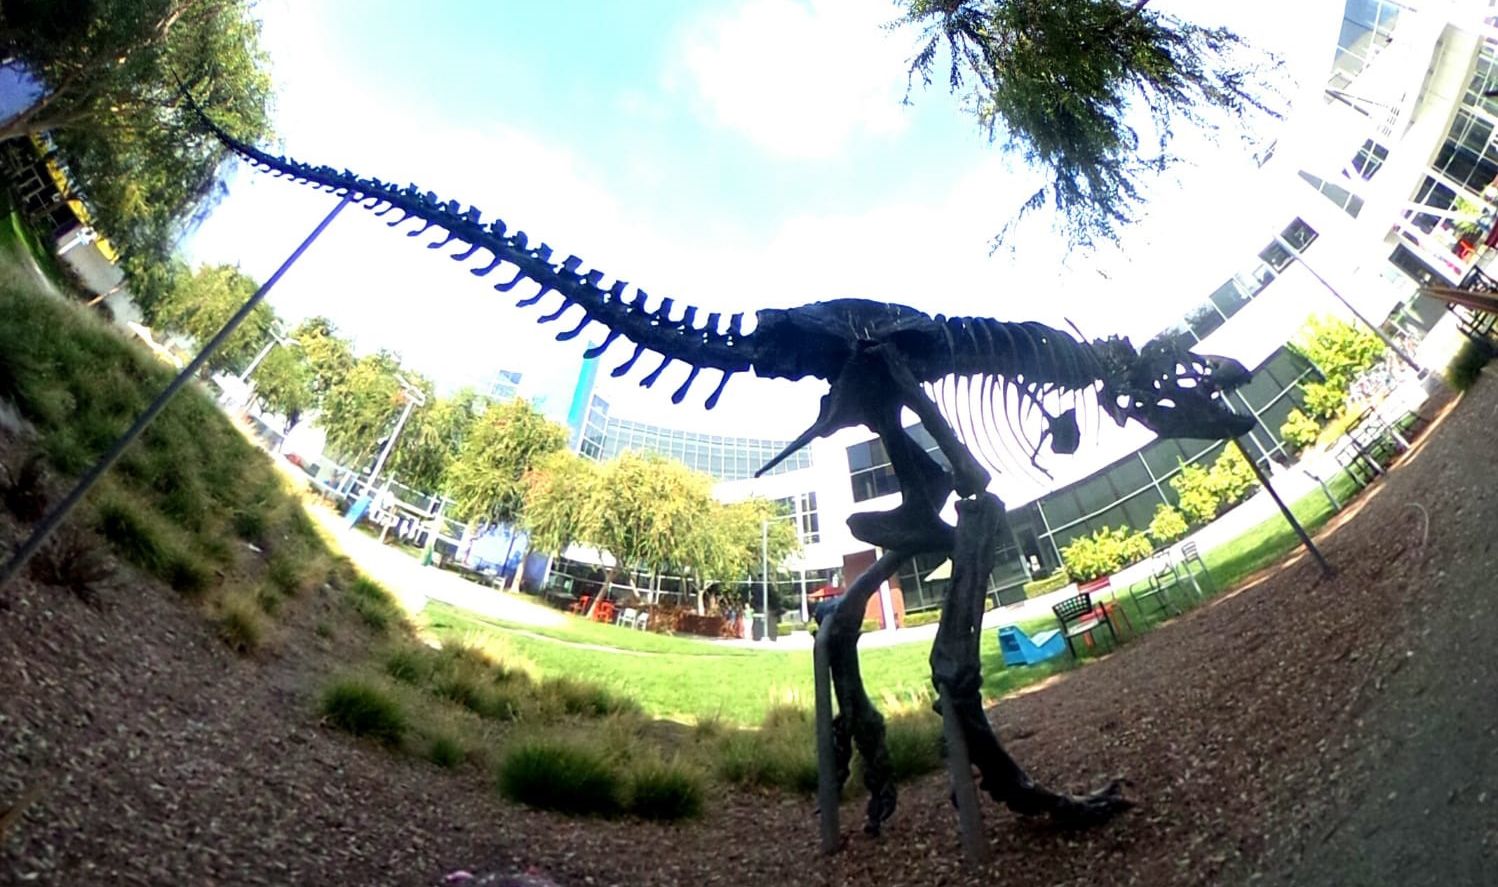 Rangka Tyrannosaurus Rex di kantor Google, Mountain View, California, Amerika Serikat.